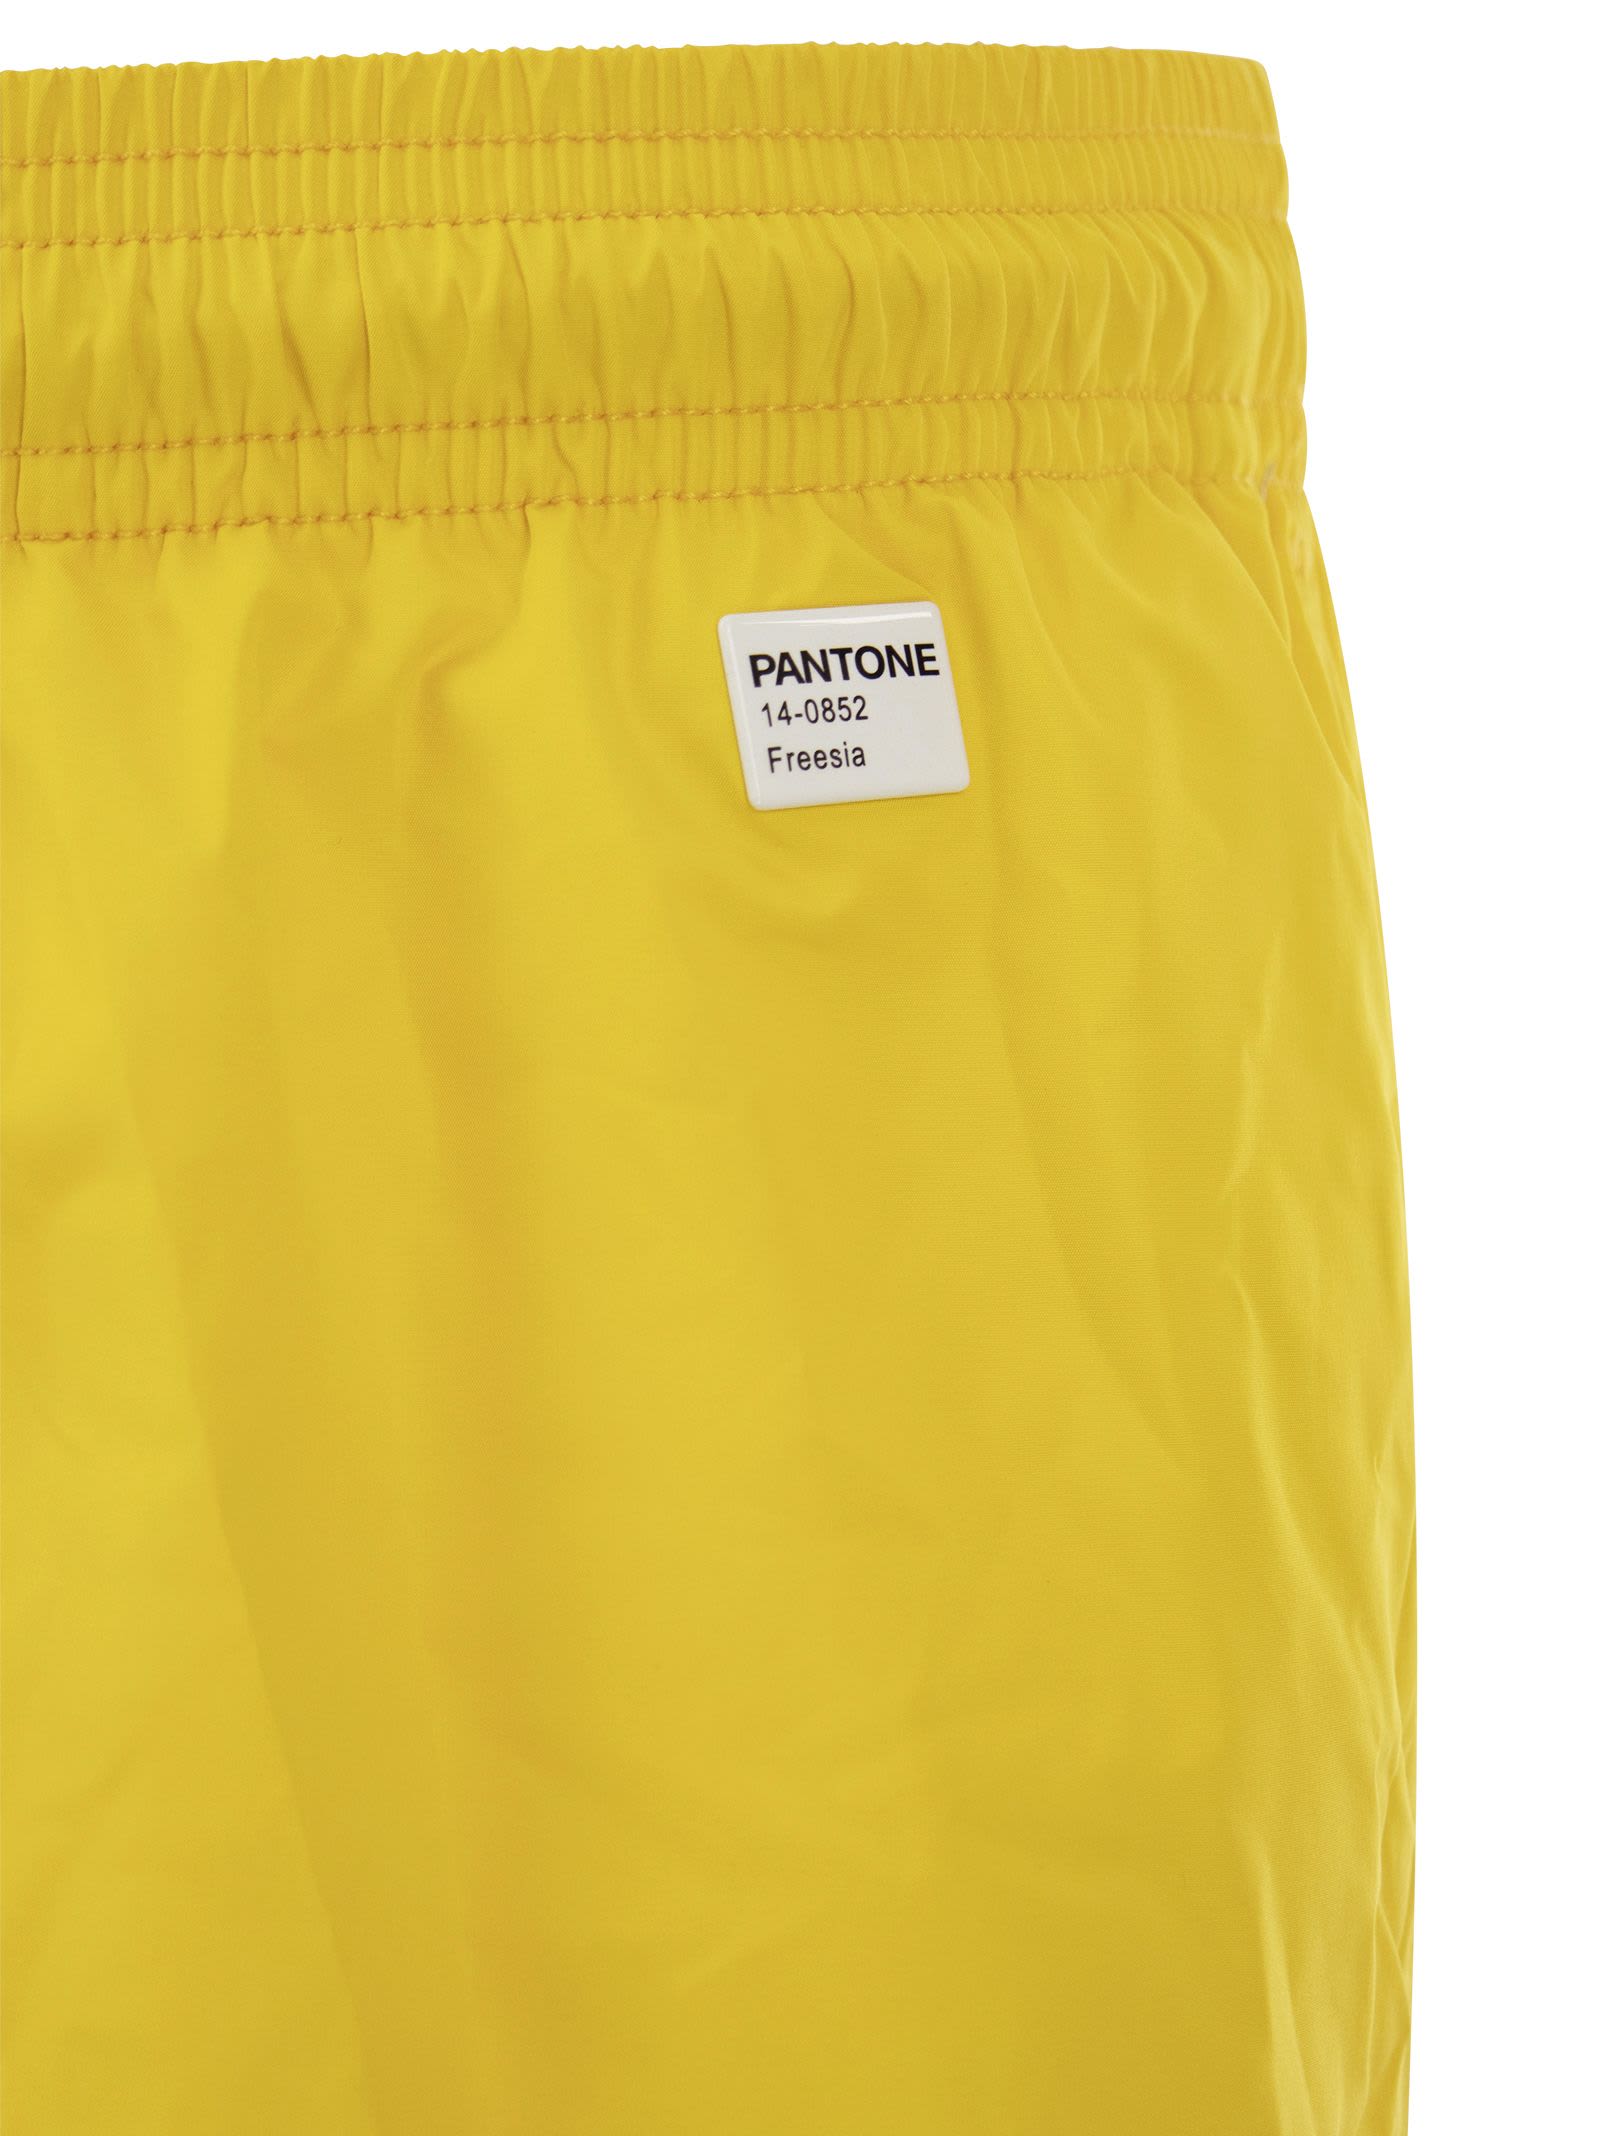 Shop Mc2 Saint Barth Beach Boxer Shorts In Lightweight Fabric In Yellow